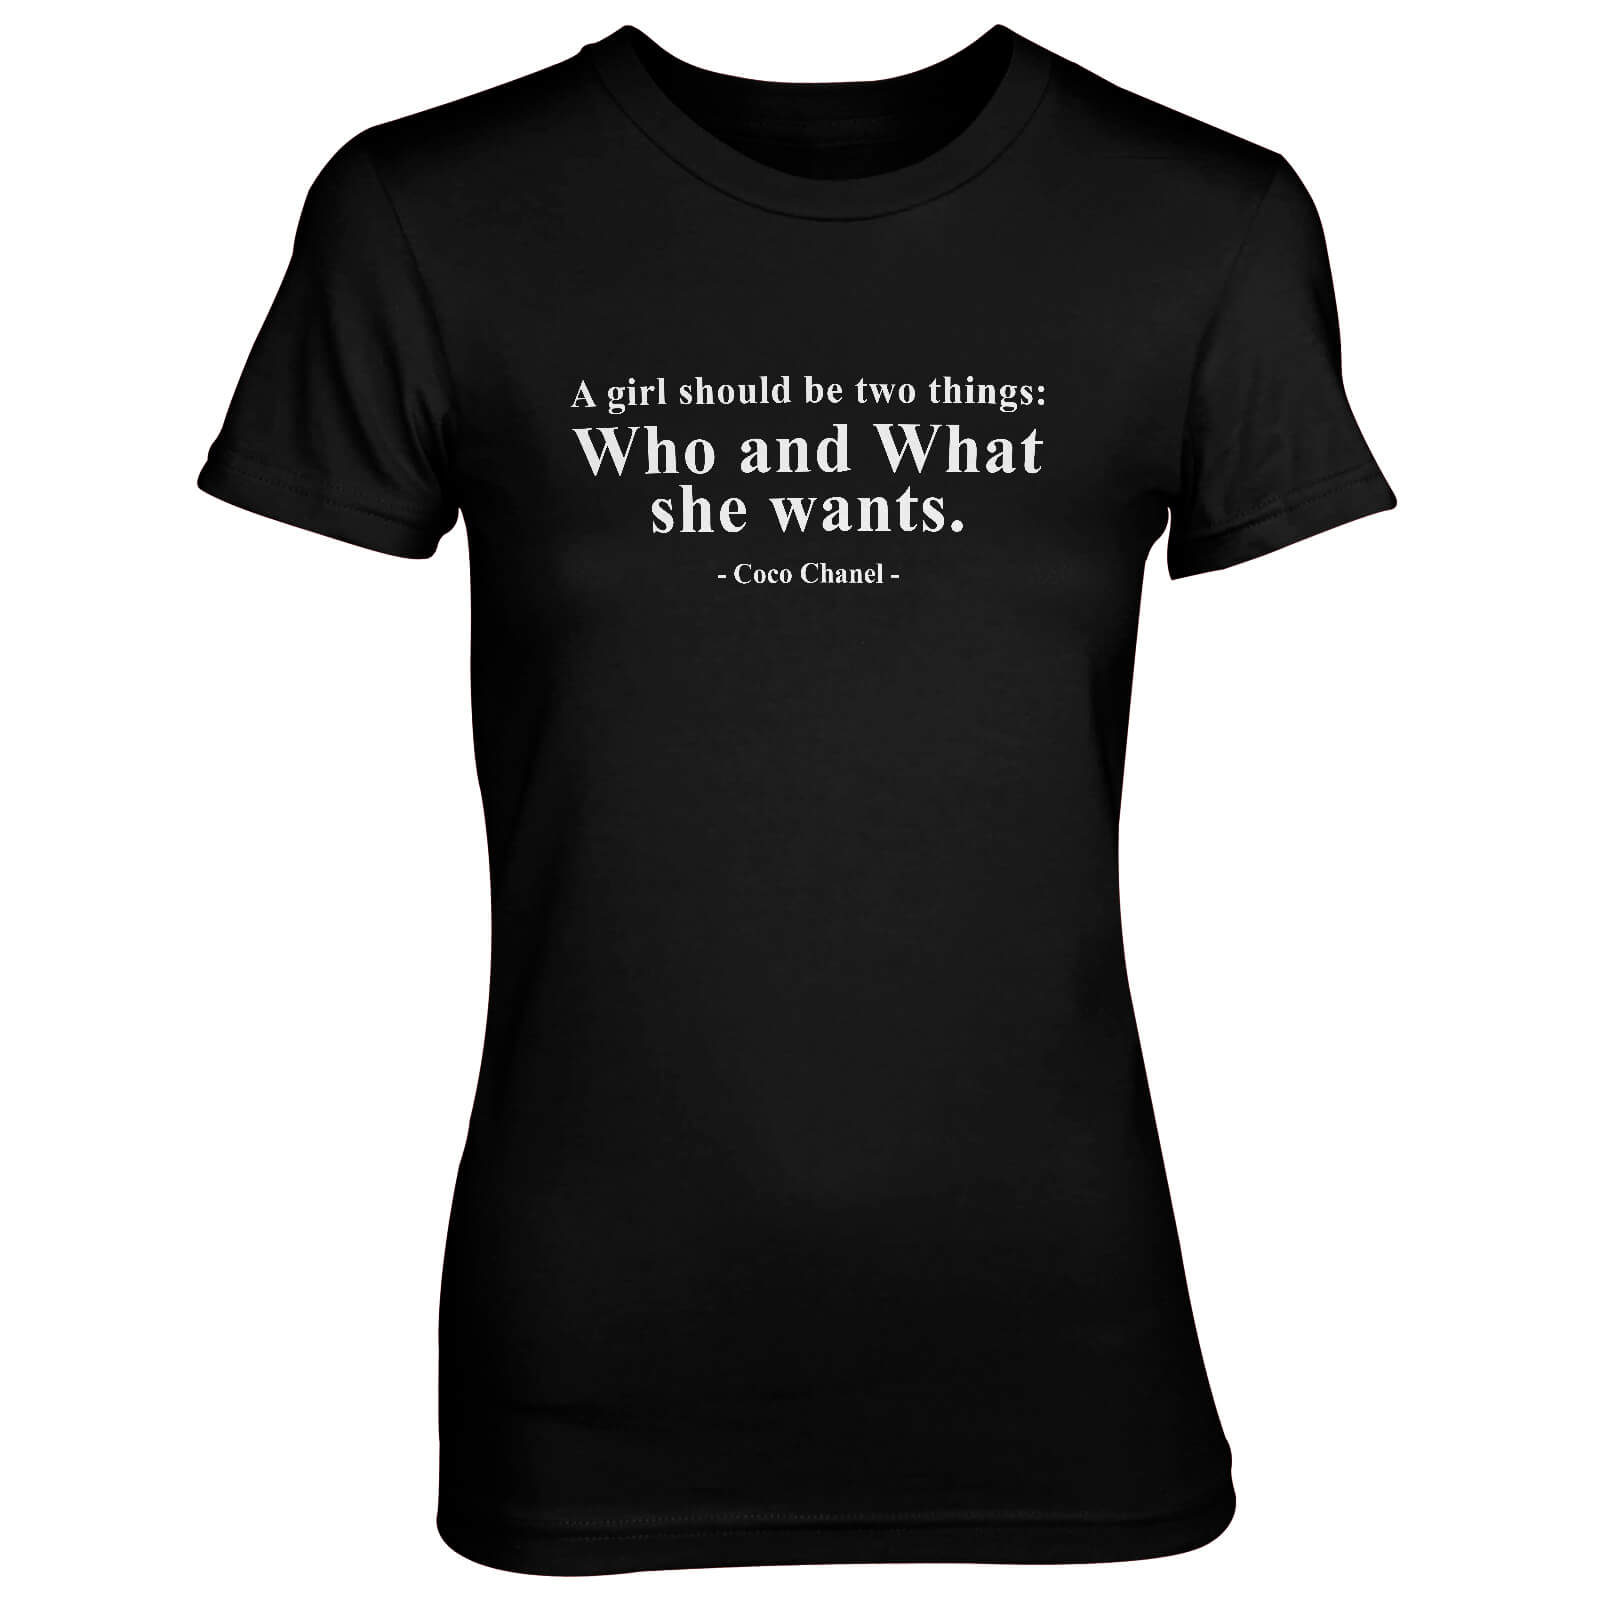 A Girl Should Be Two things Women's Black T-Shirt - S - Black